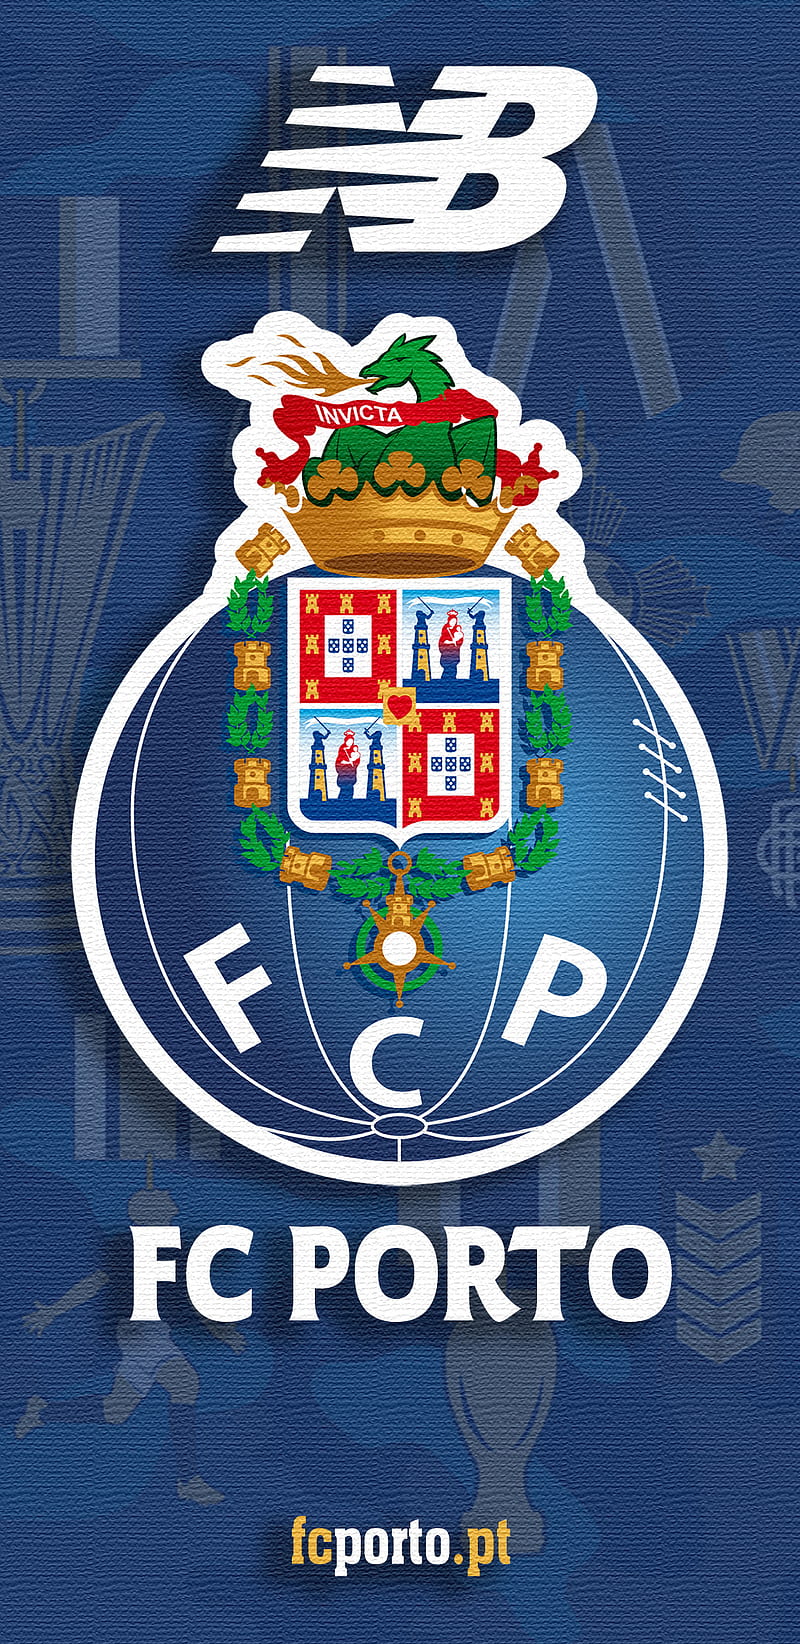 FC PORTO, 1893, azuis e brancos, dragoes, futebol clube do porto, iphone, new balance, portugal, primeira liga, samsung, HD phone wallpaper